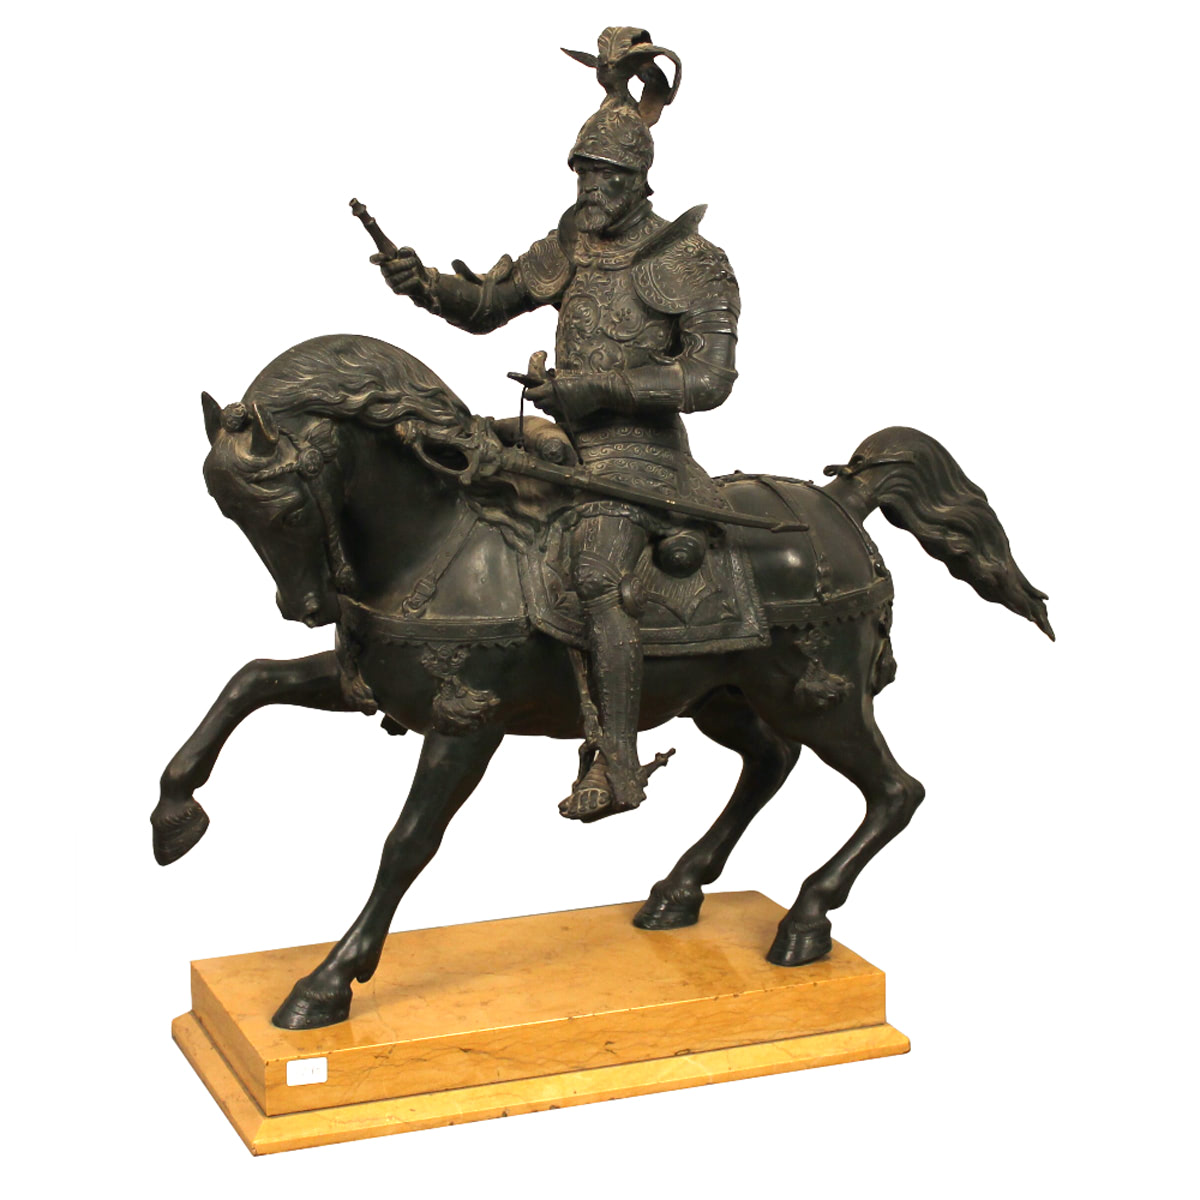 Condottiero a cavallo - Leader on horseback